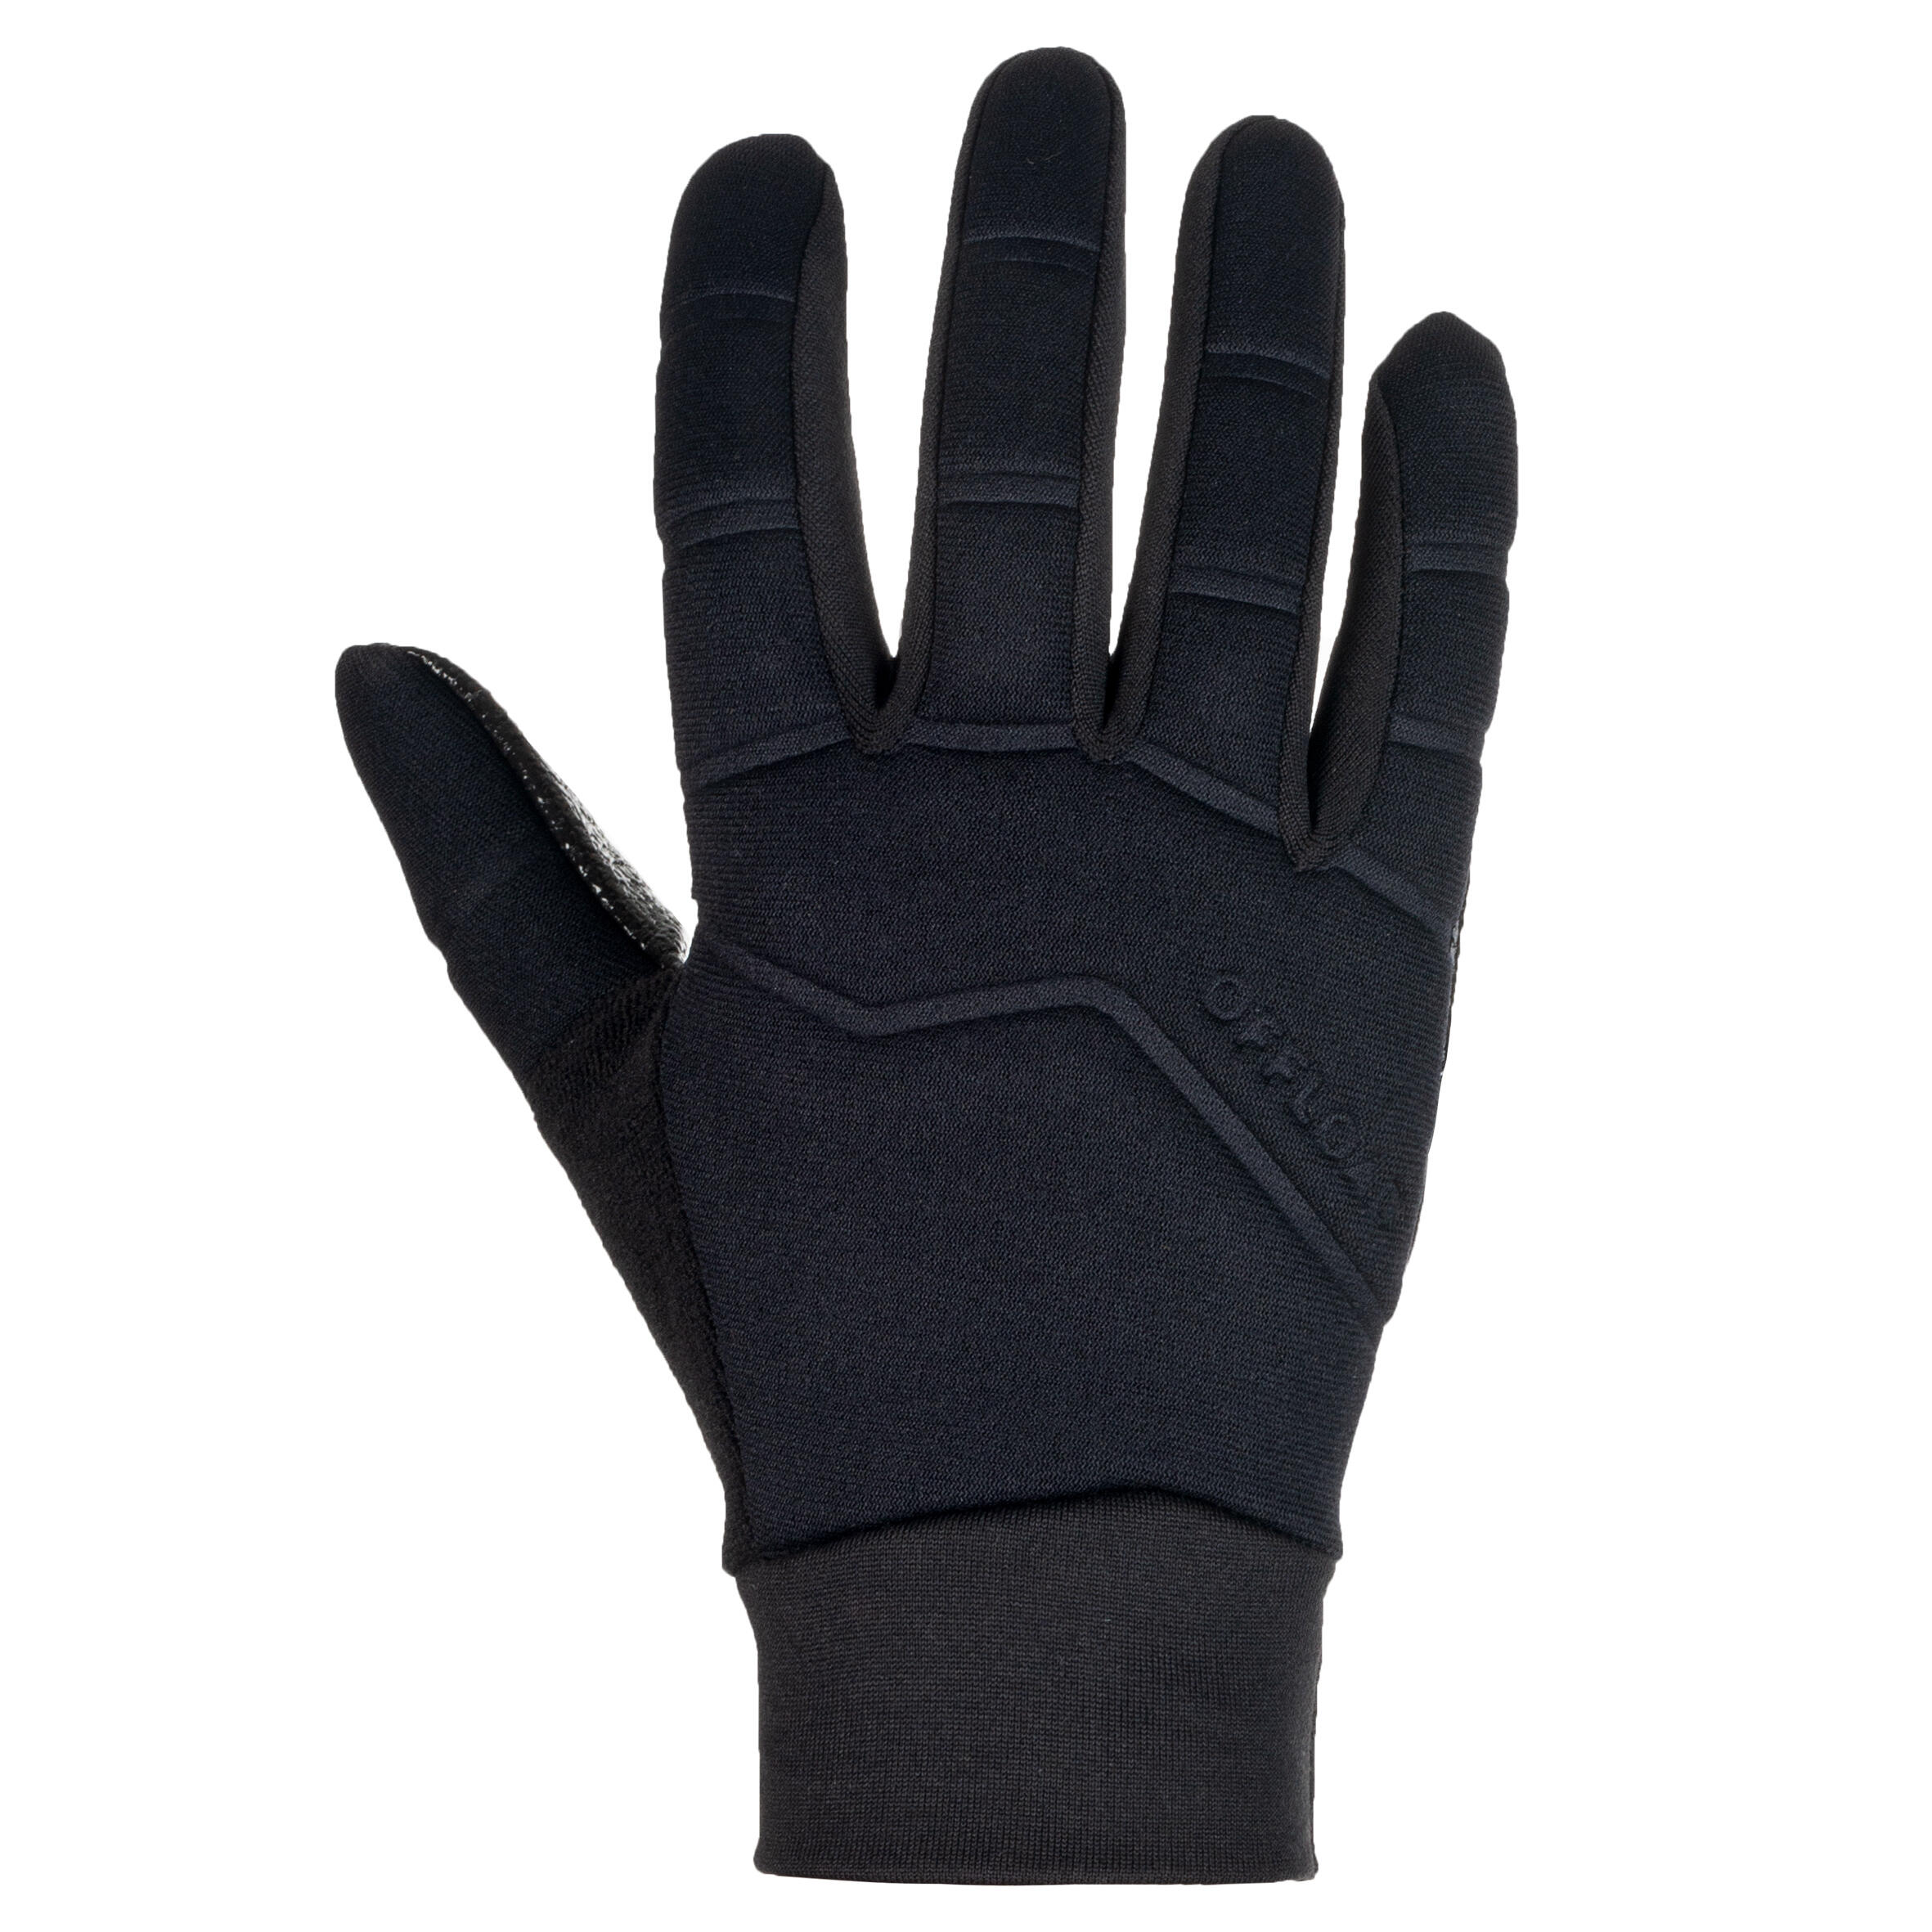 R500 Adult Winter Rugby Gloves - Black 1/8